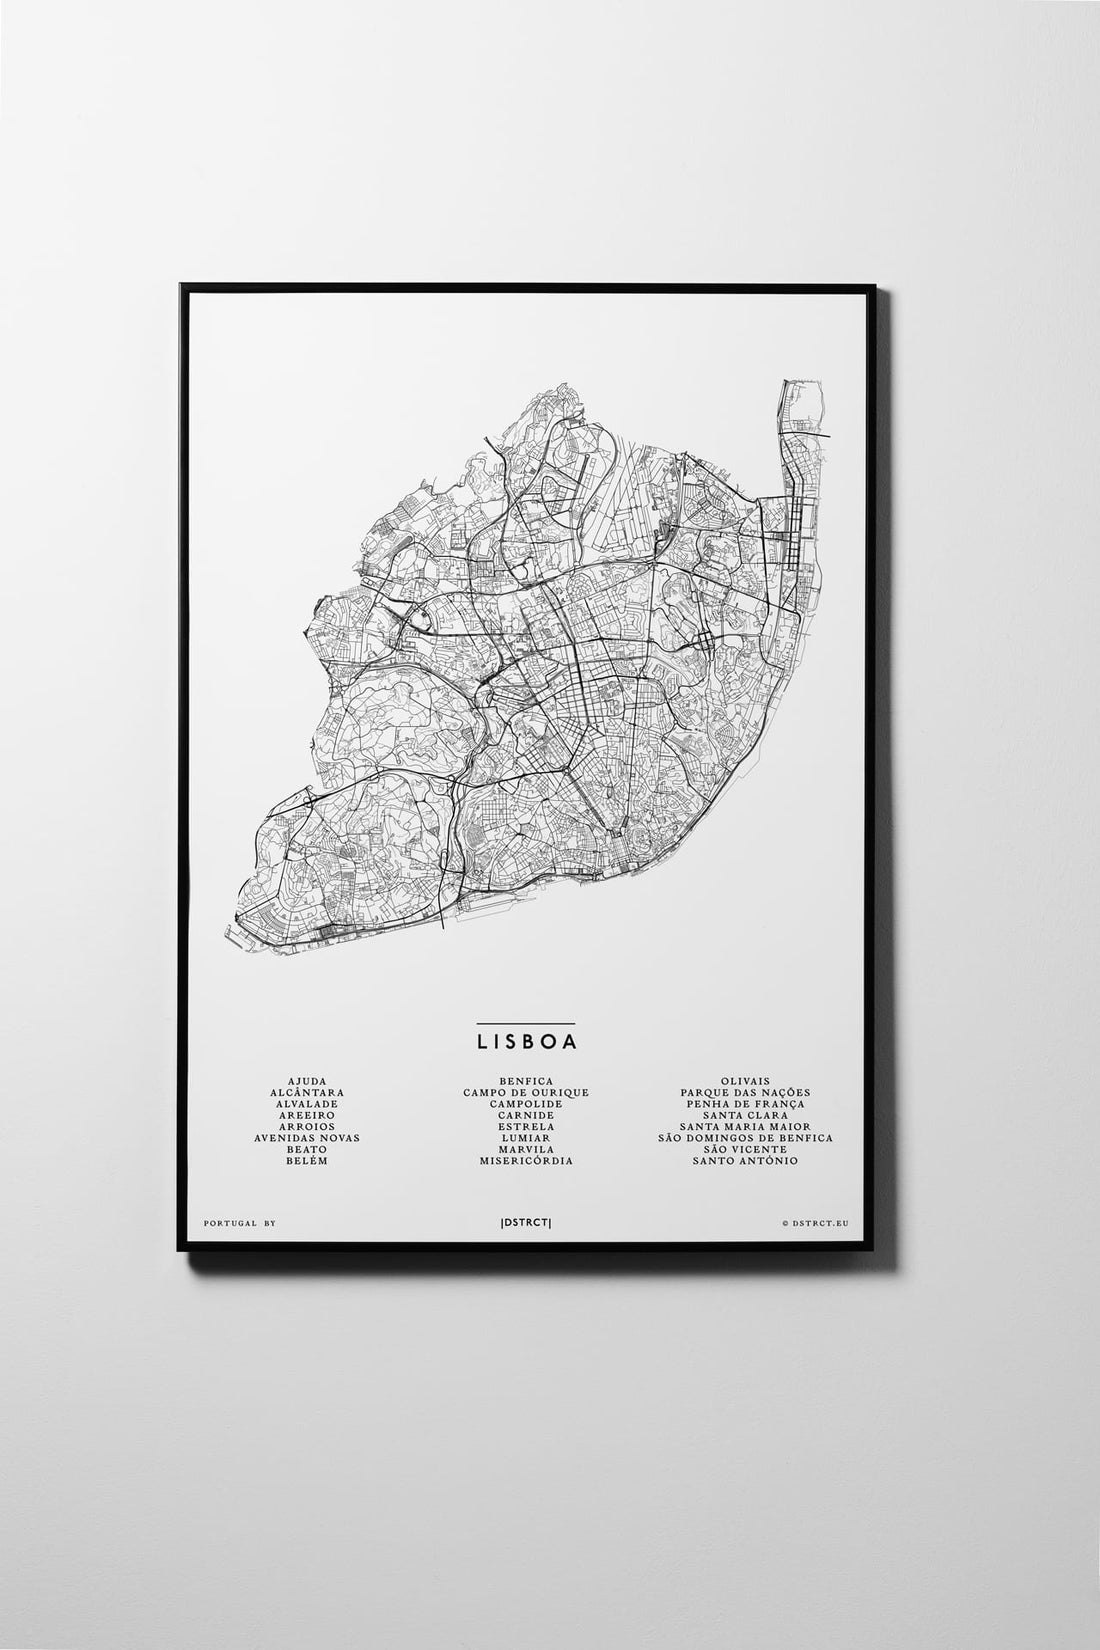 Lissabon | Lisboa | Portugal | City Map Karte Plan Bild Print Poster Illustration Framed mit Rahmen L & XL